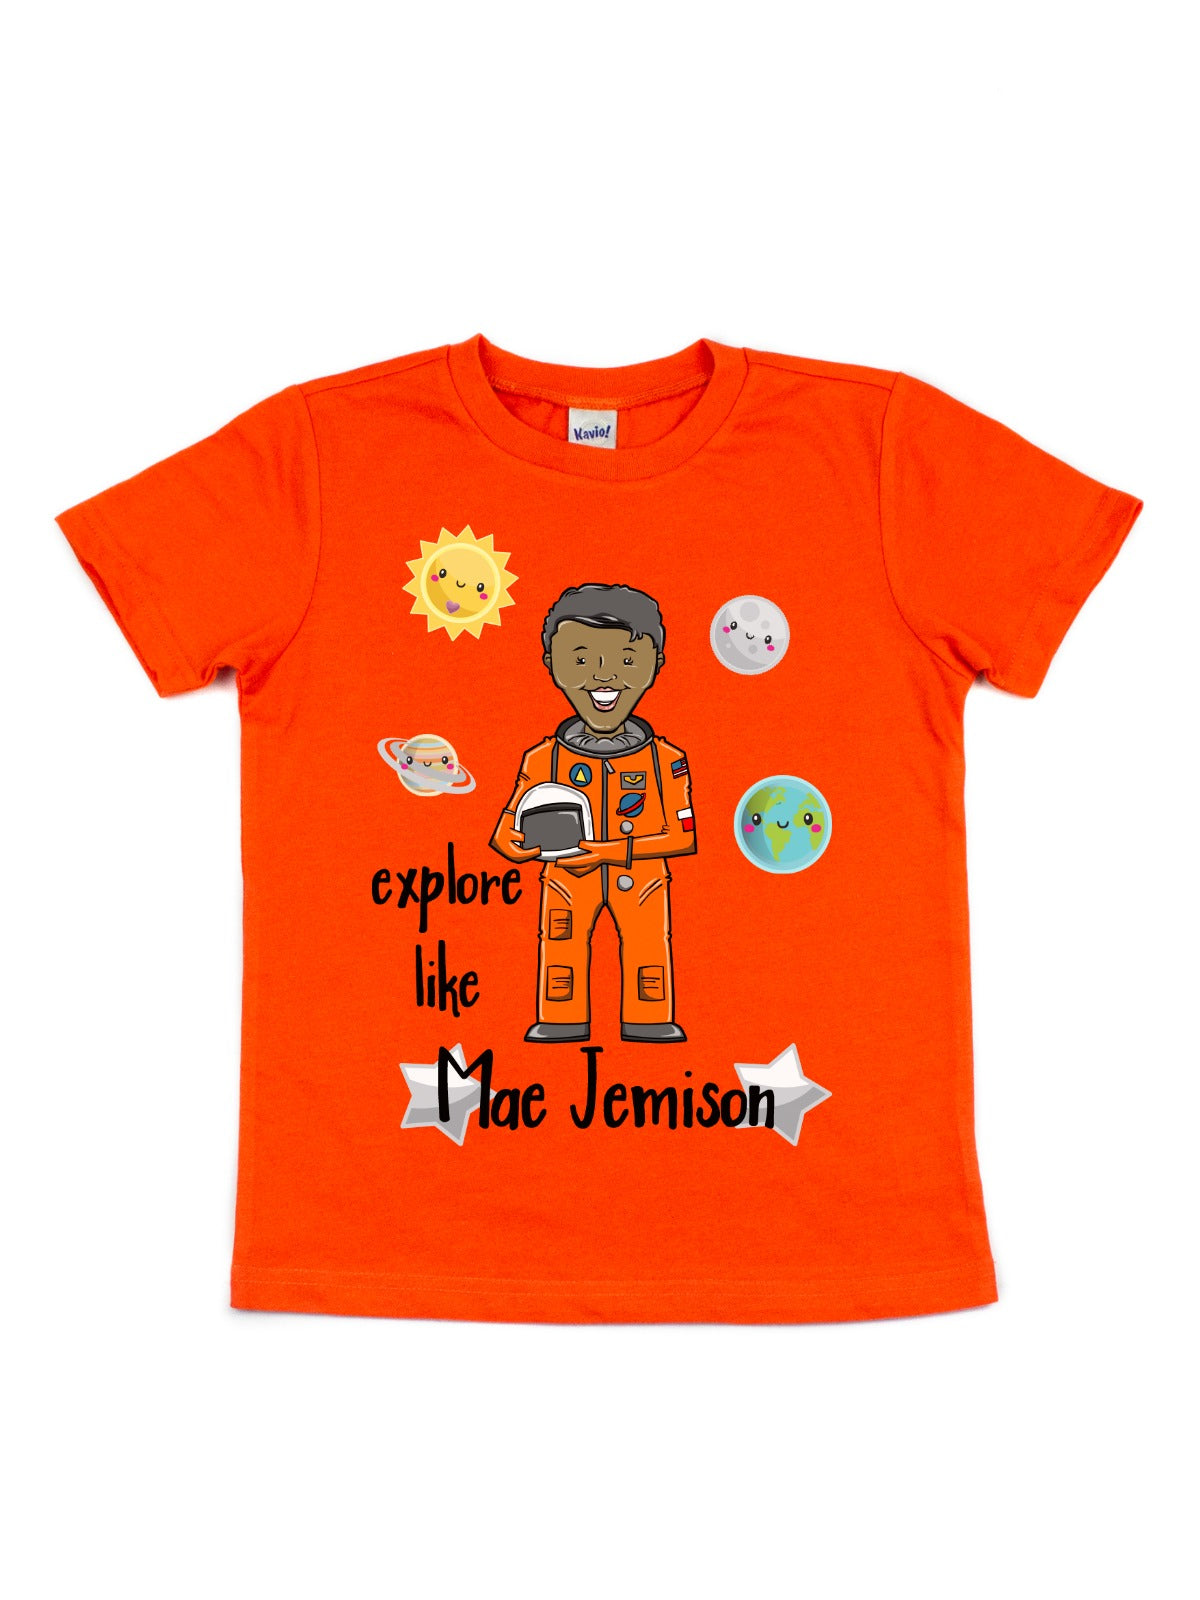 Explore like Mae Jemison Black History Shirt in Orange